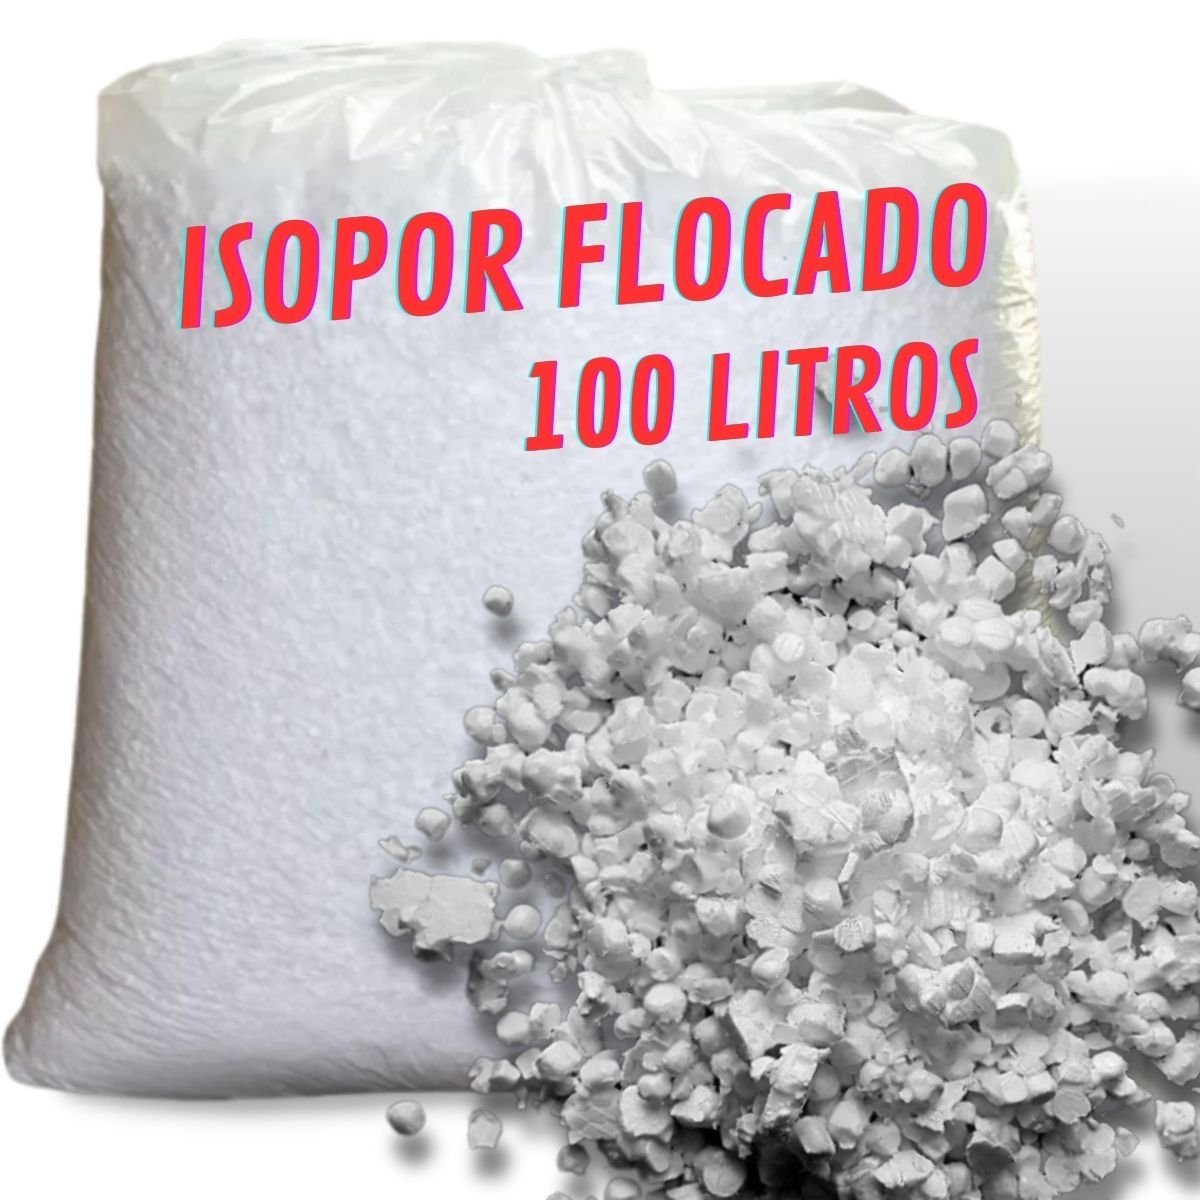 Refil de Isopor Flocado 100 Litros para Enchimento de Puffs Almofadas Bichos de Pelúcia Artesanato M